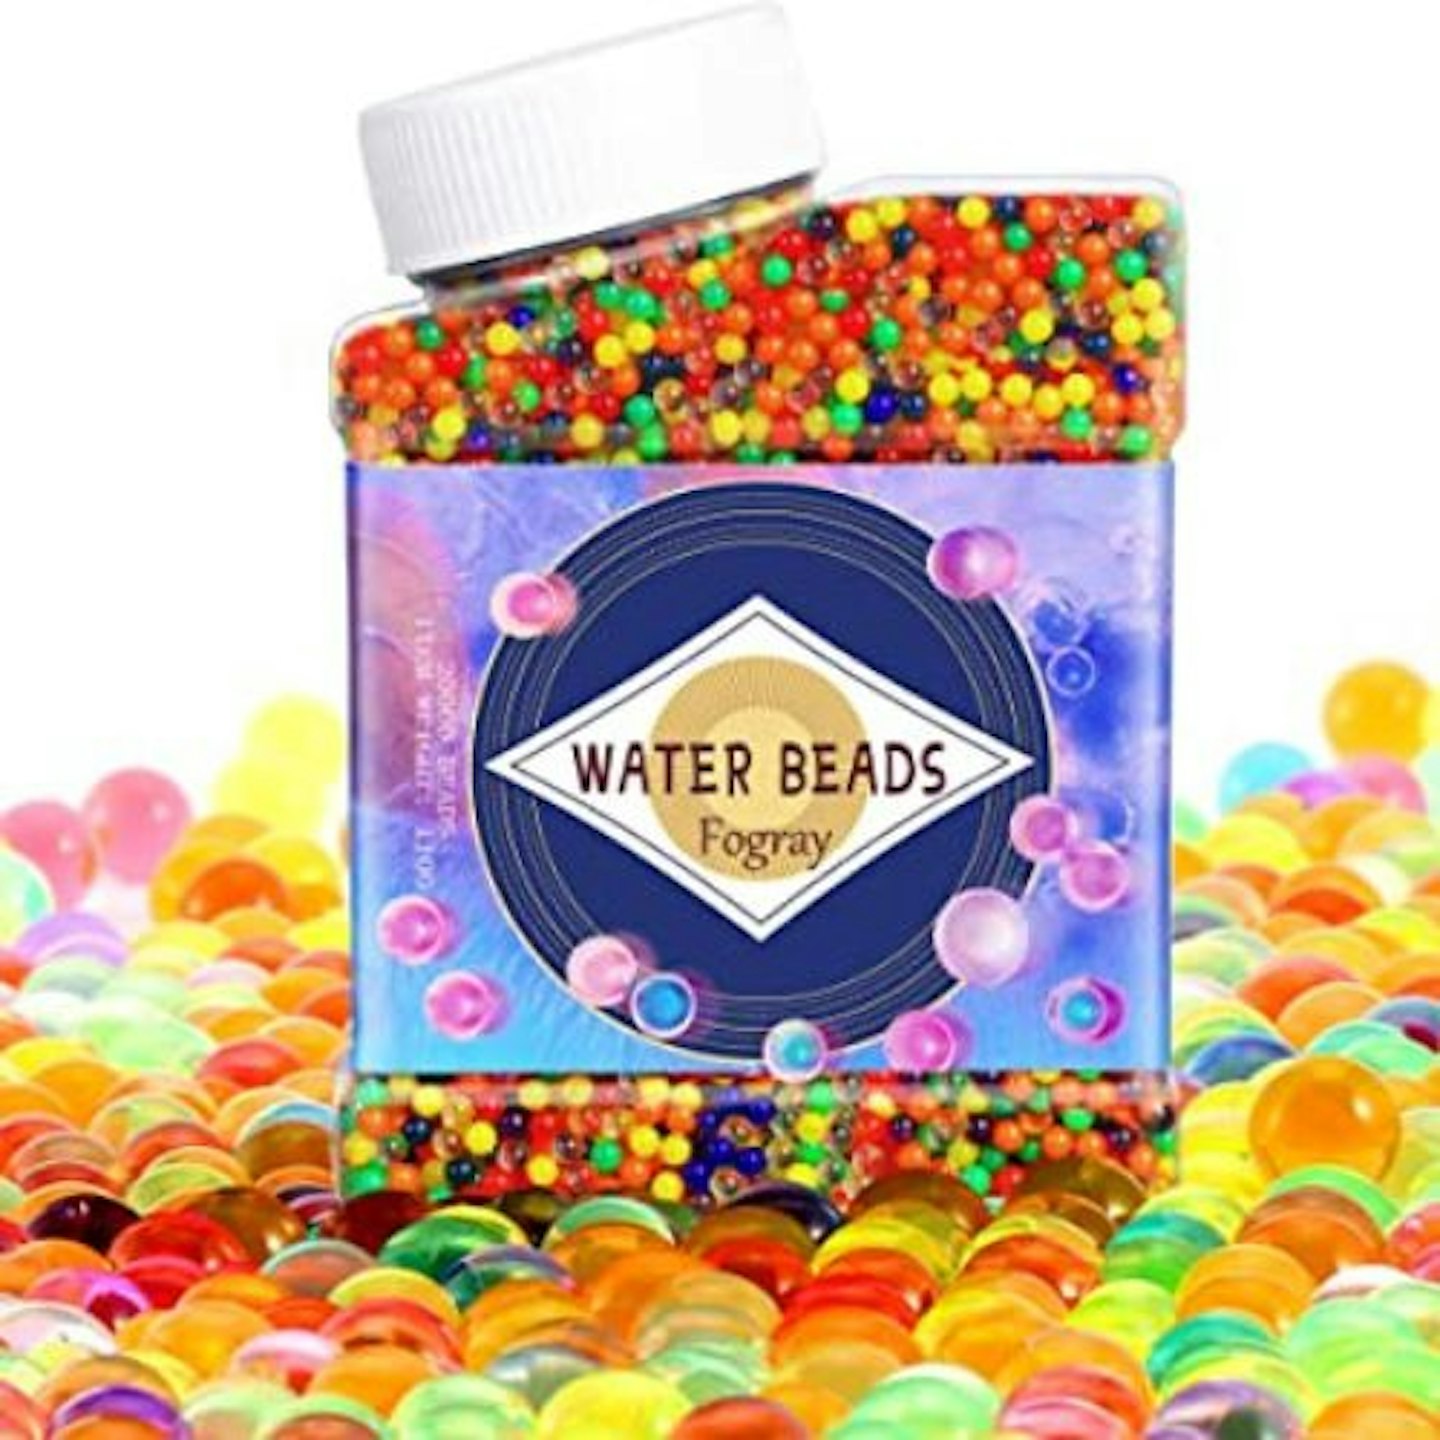 Fogray Water Beads